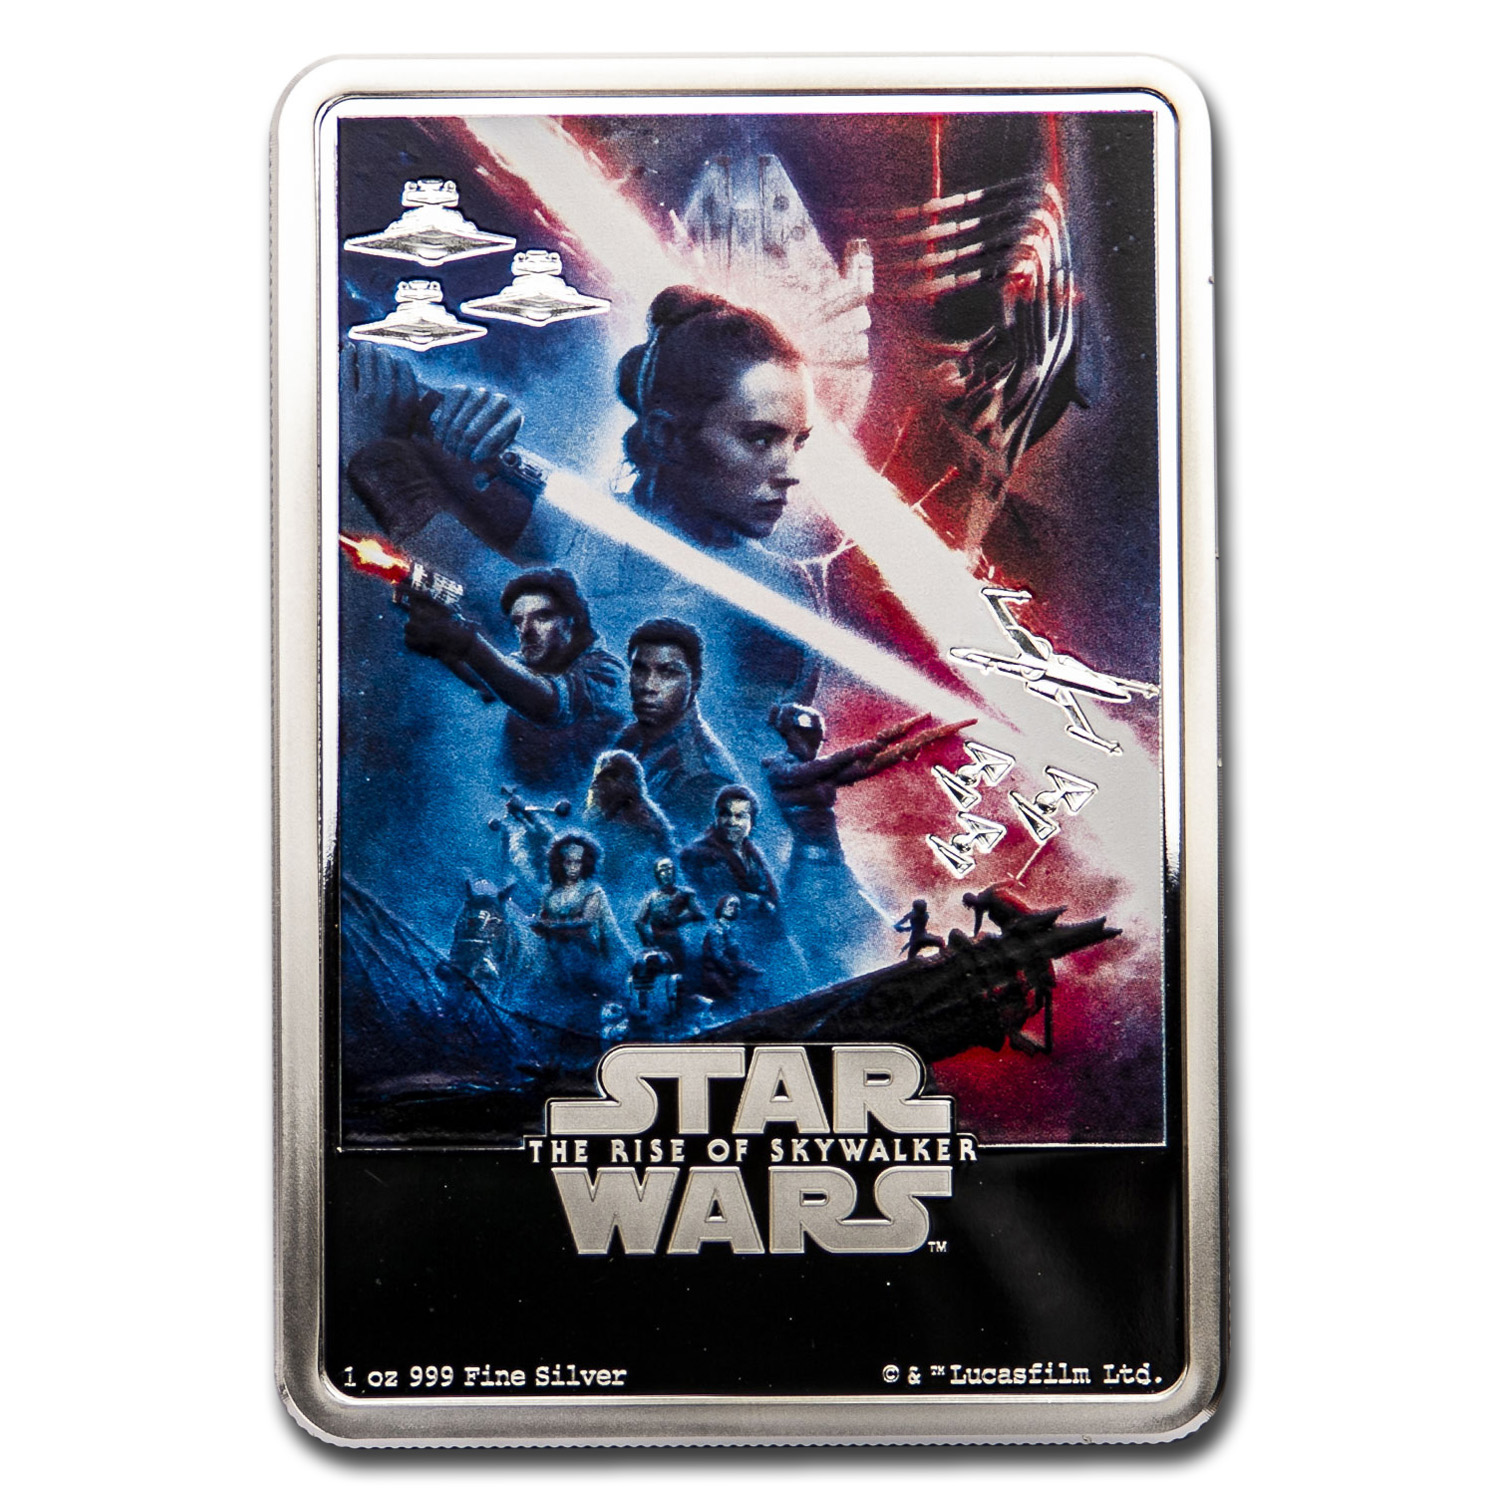 Luke Sky walker 5g Silver Coin Note PLUS Collector's Album Star Wars